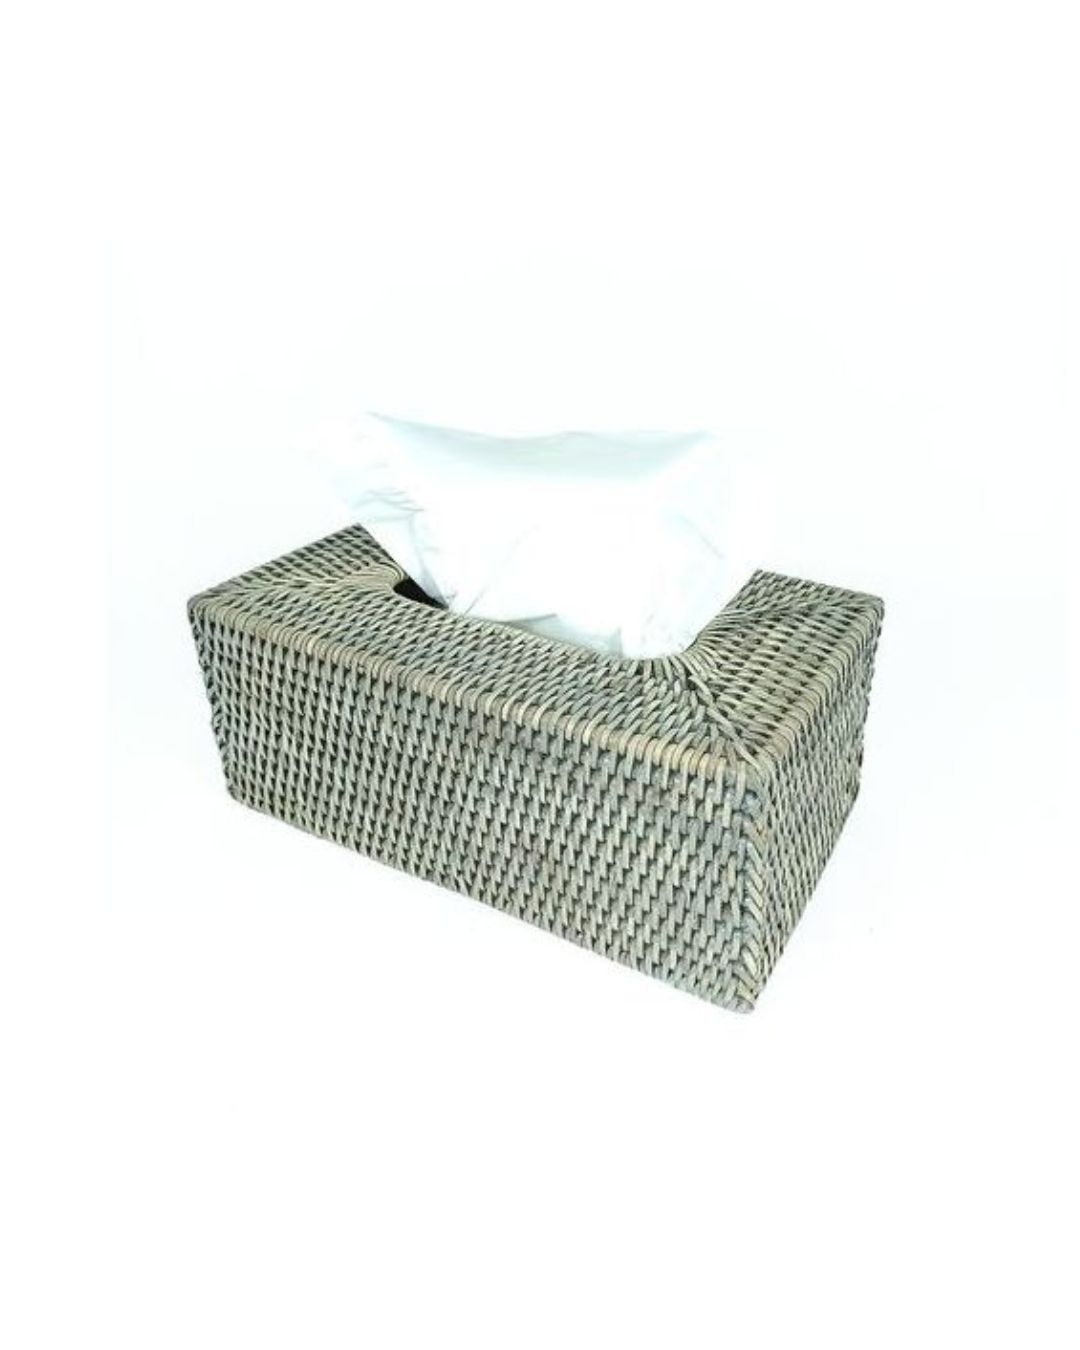 Rattan Tissue Box - Grey